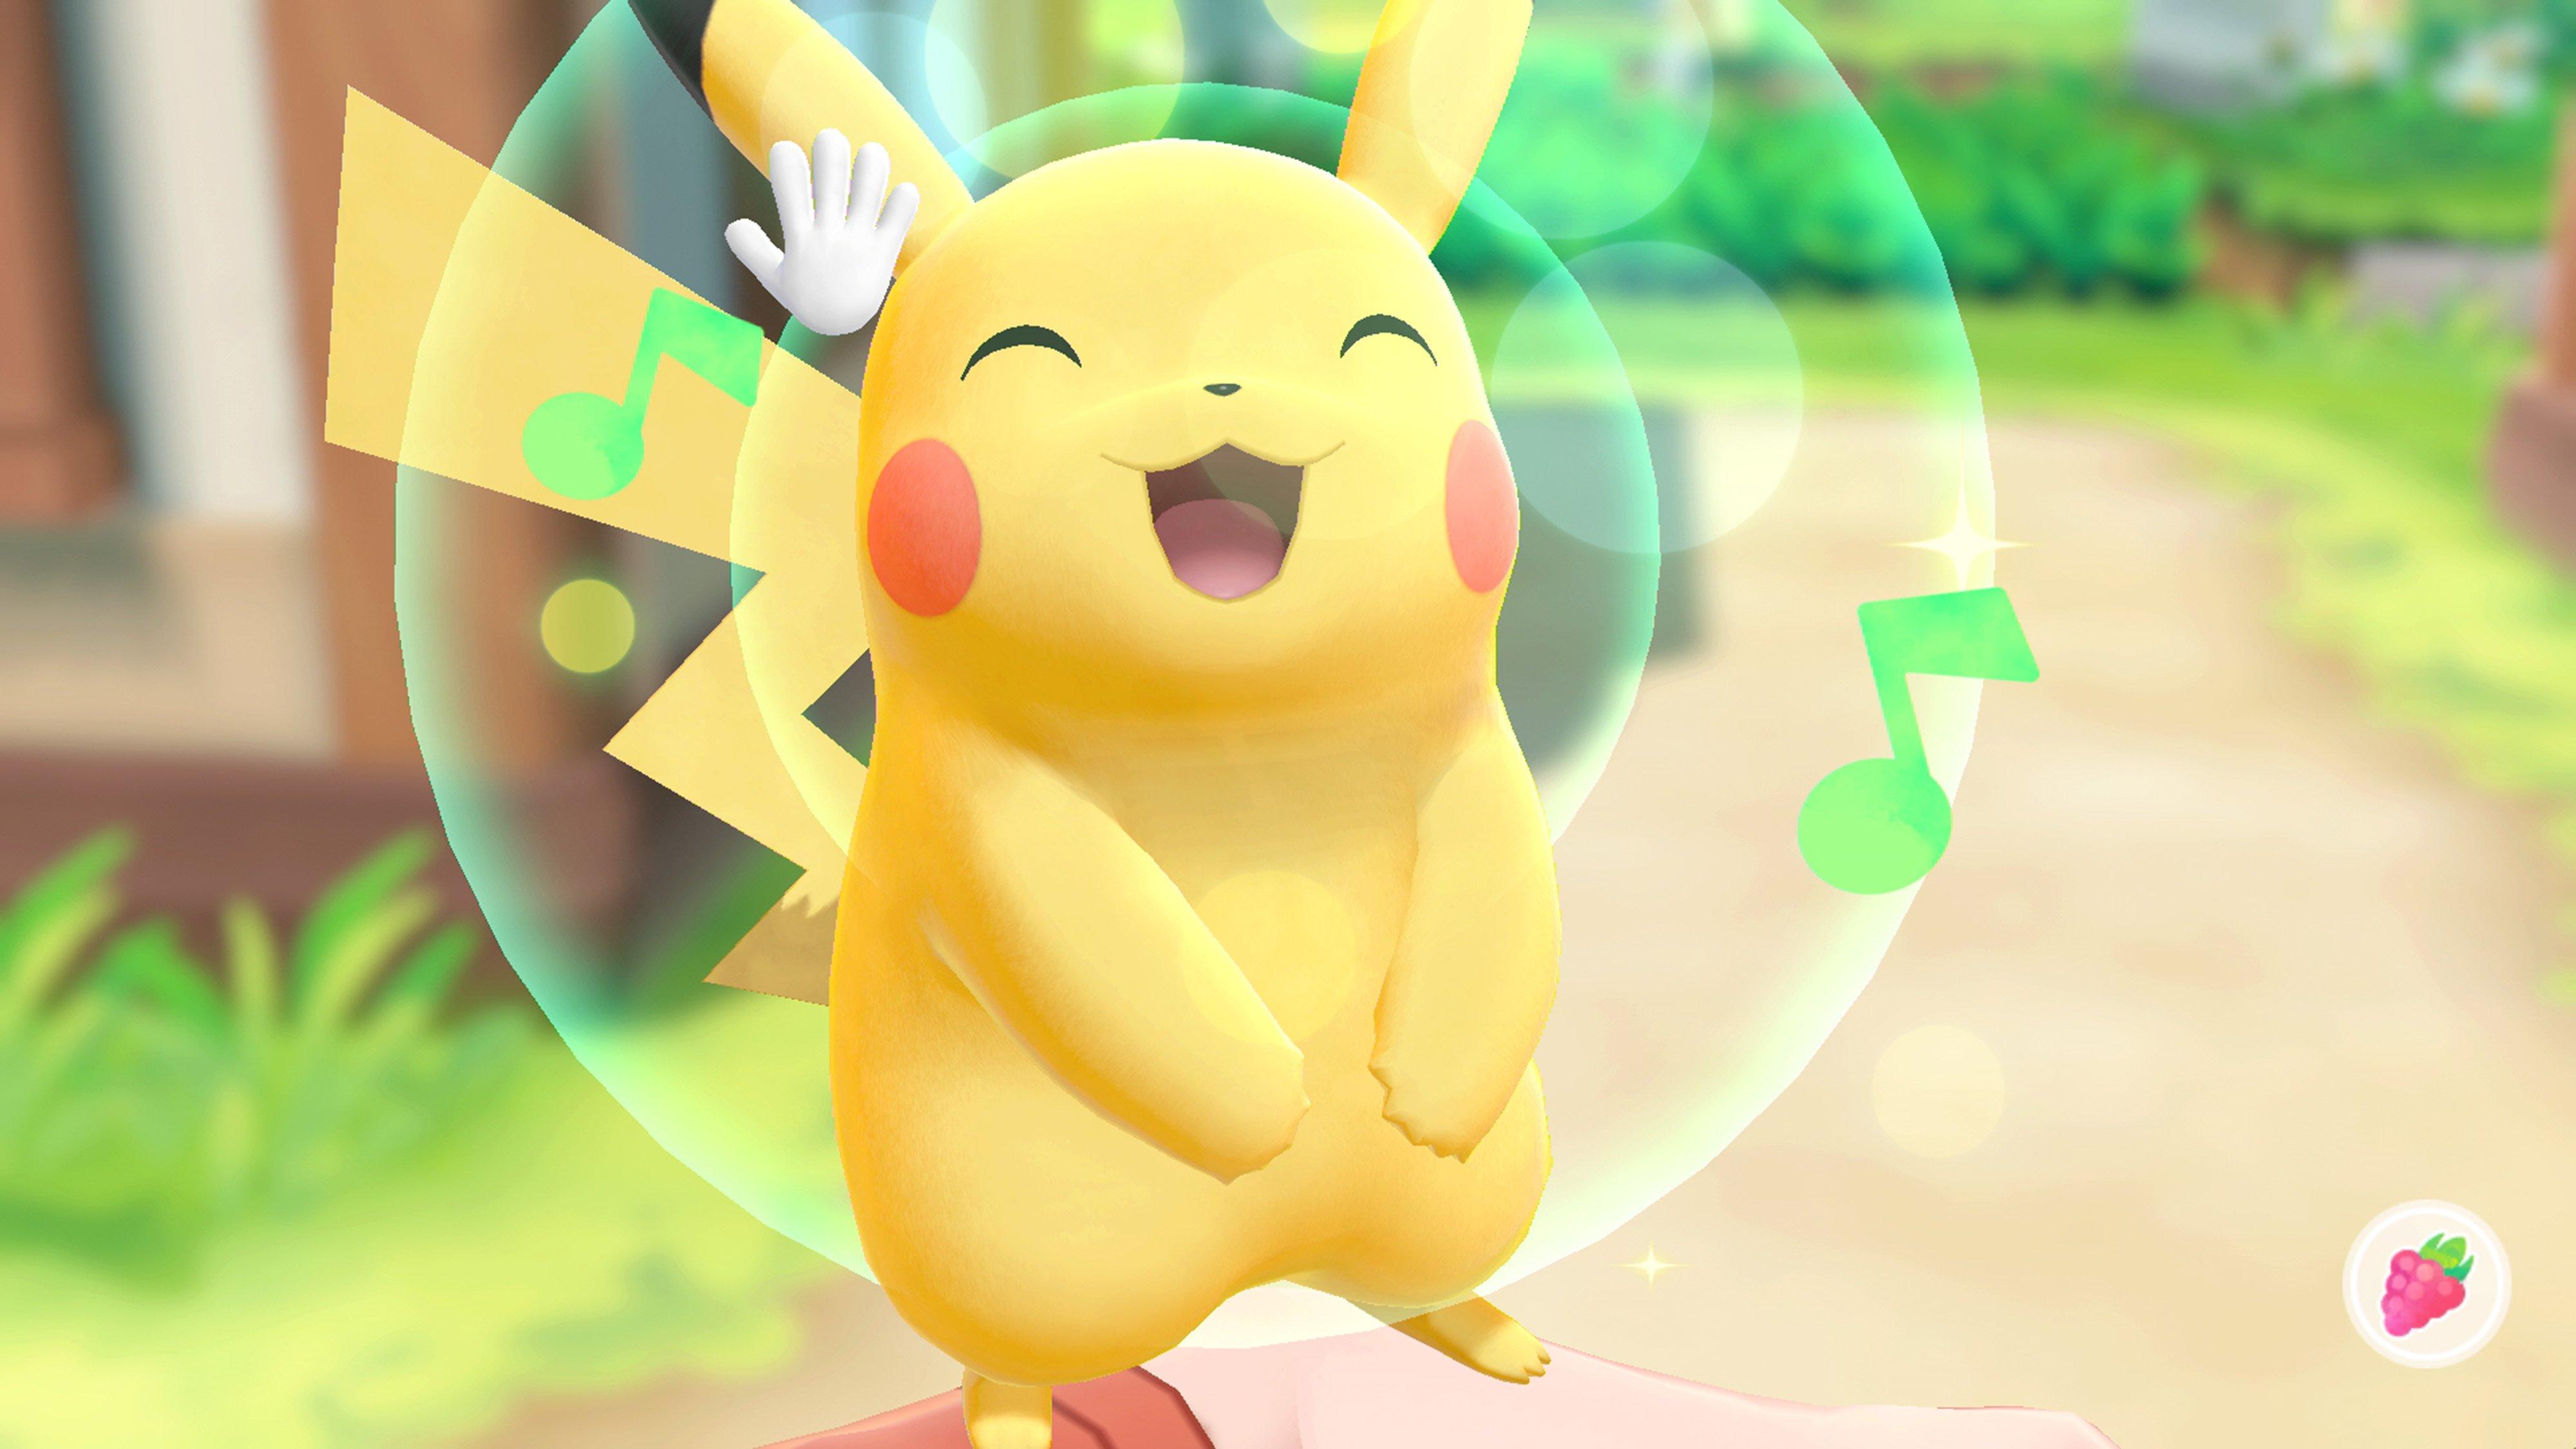 Pokémon™: Let's Go, Pikachu! for Nintendo Switch - Nintendo Official Site